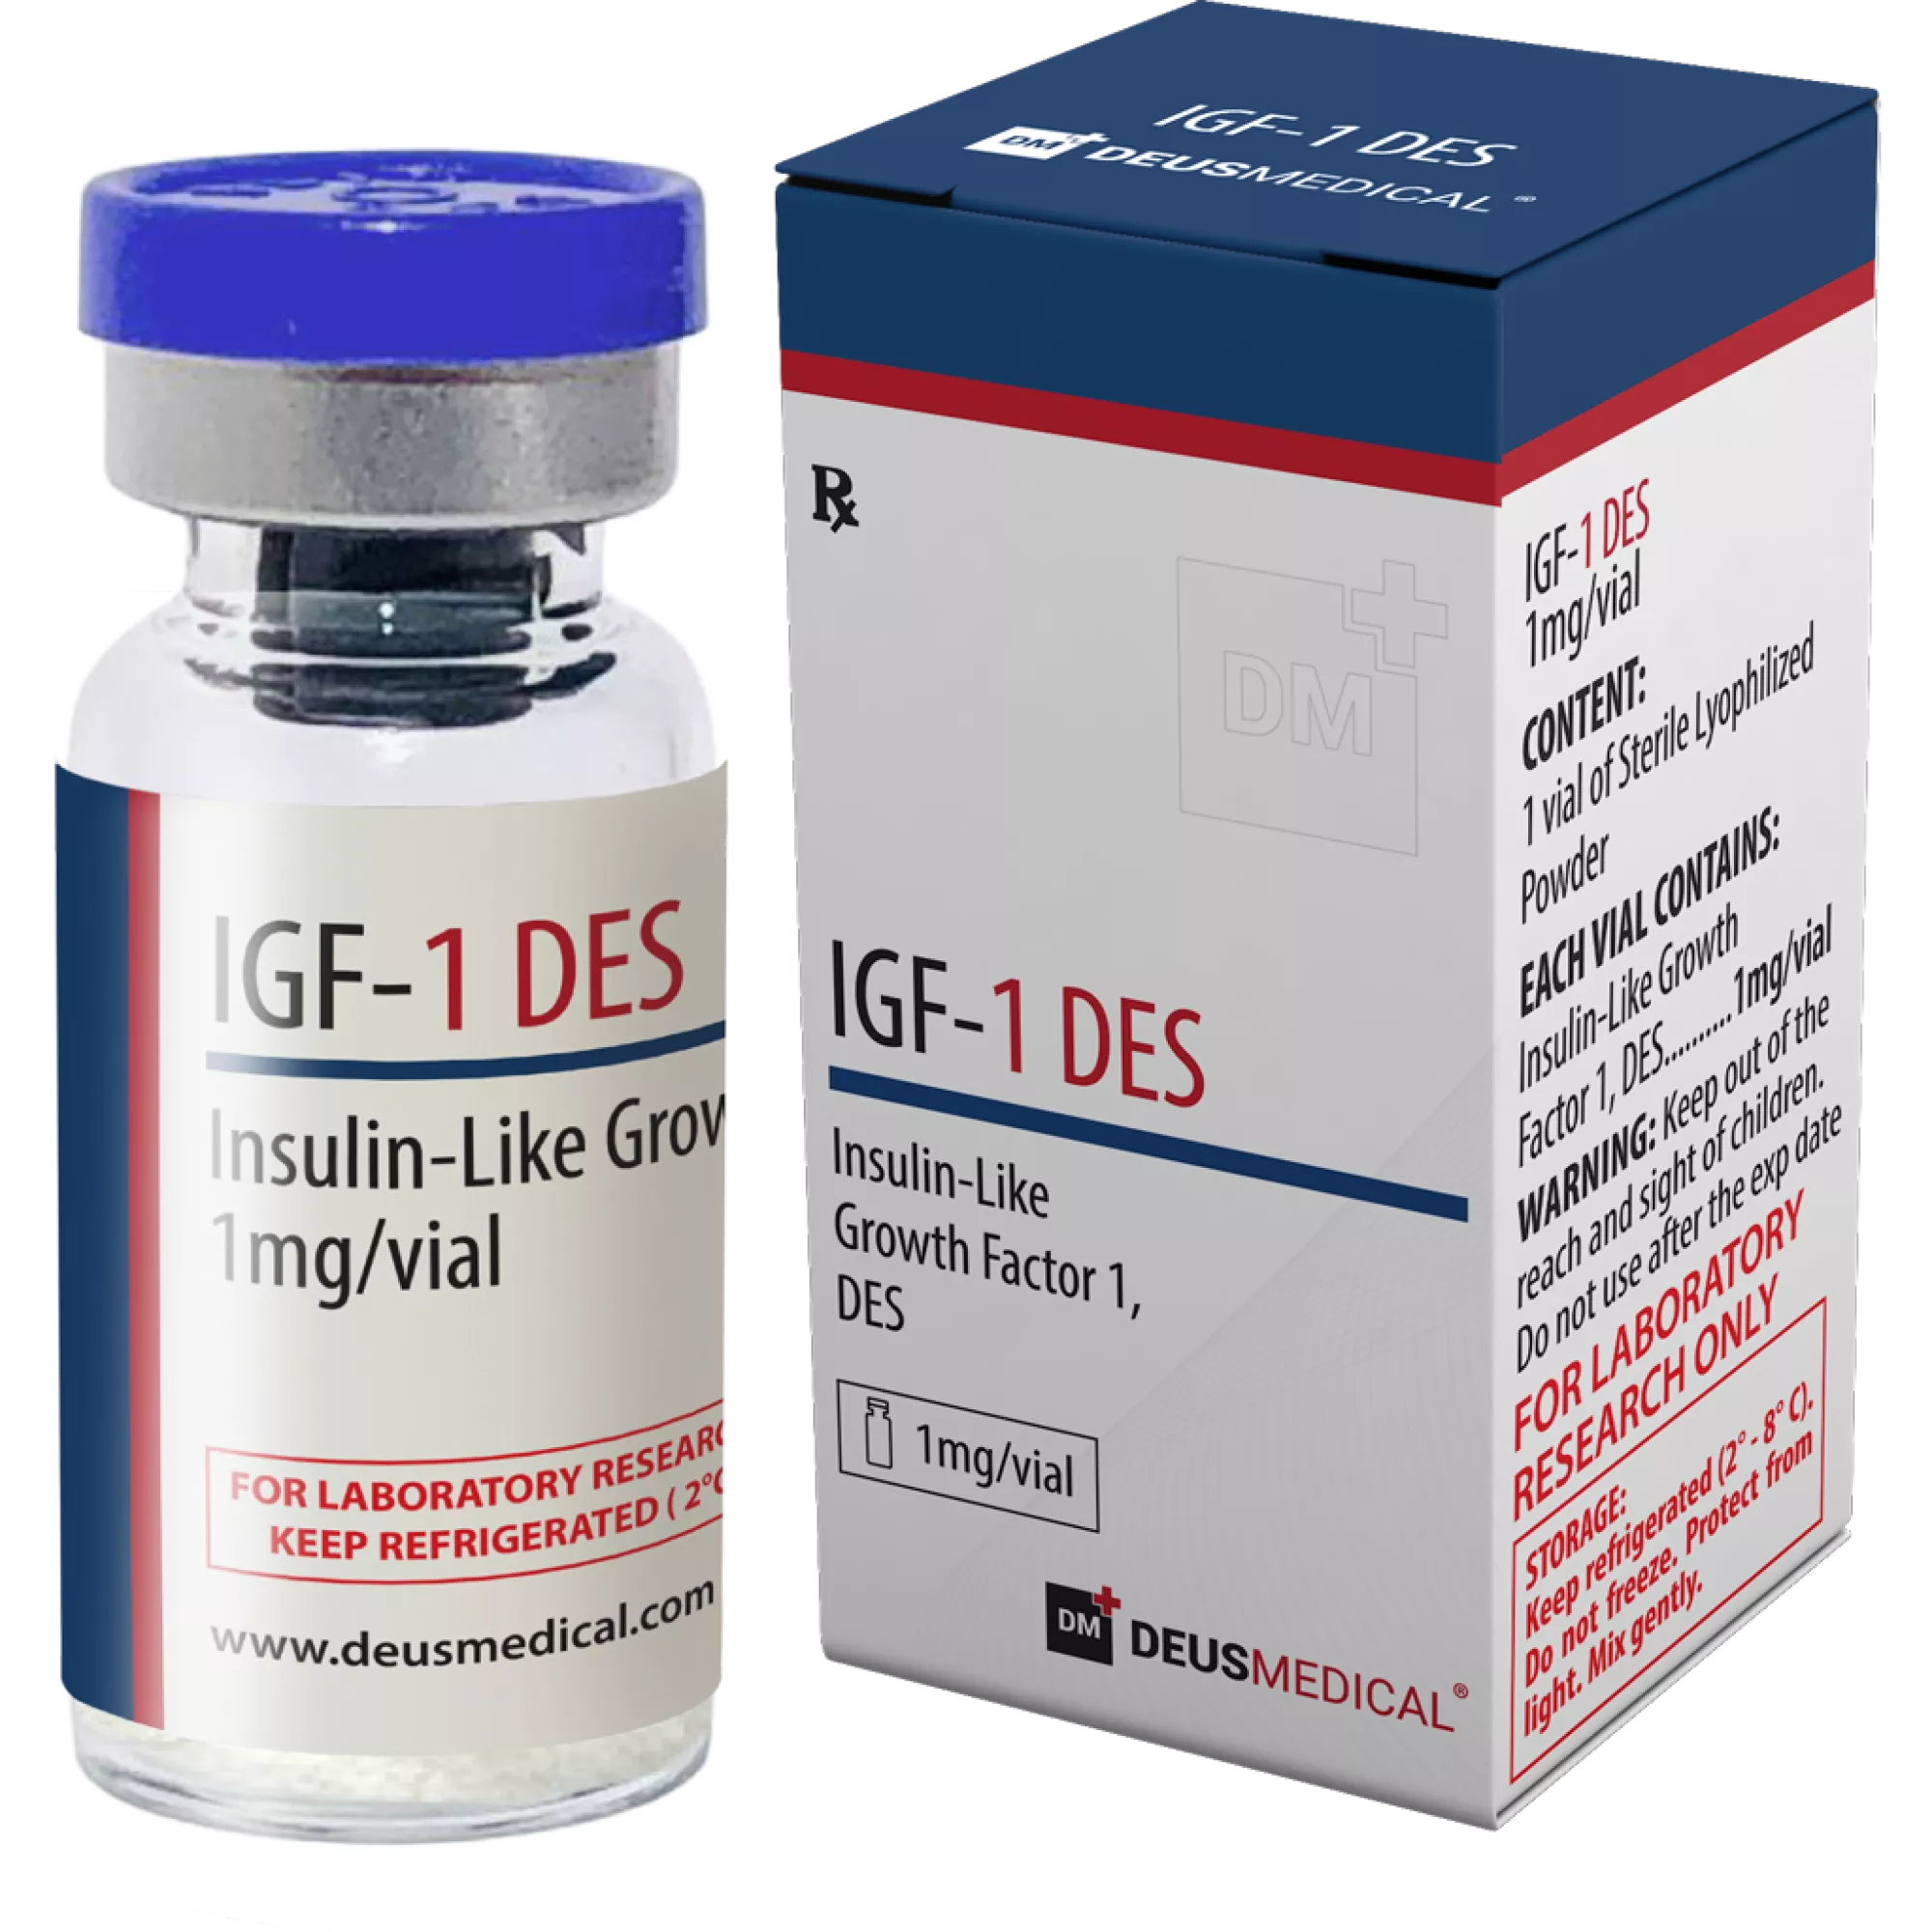 IGF-1 DES (insulinliknande tillväxtfaktor 1, DES), Deus Medical, köp steroider online - www.deuspower.shop